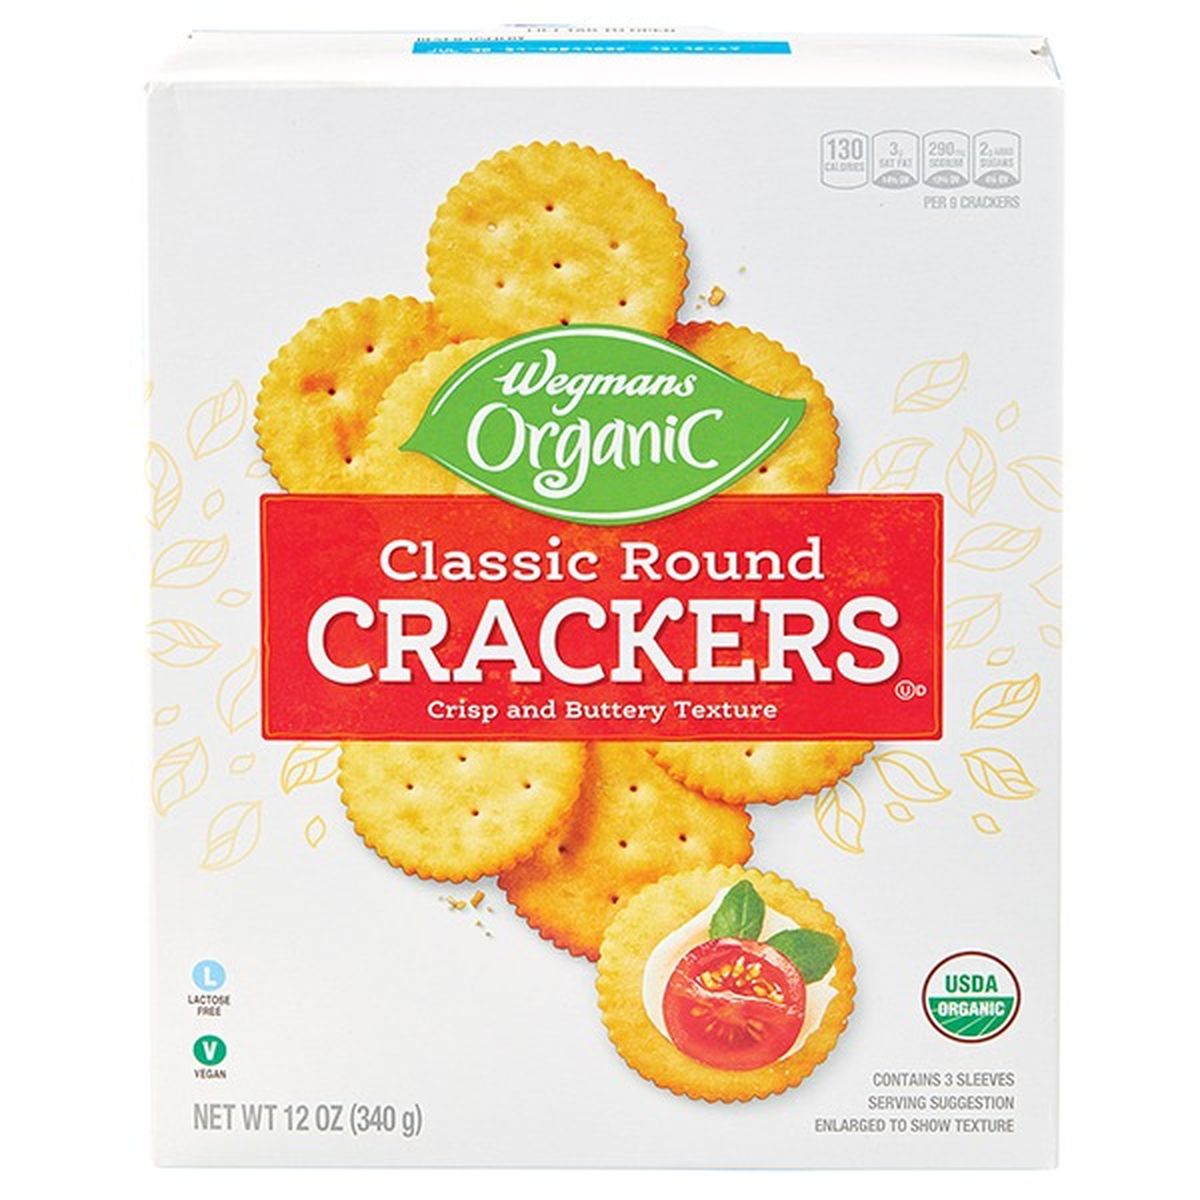 Calories in Wegmans Organic Organic Classic Round Crackers